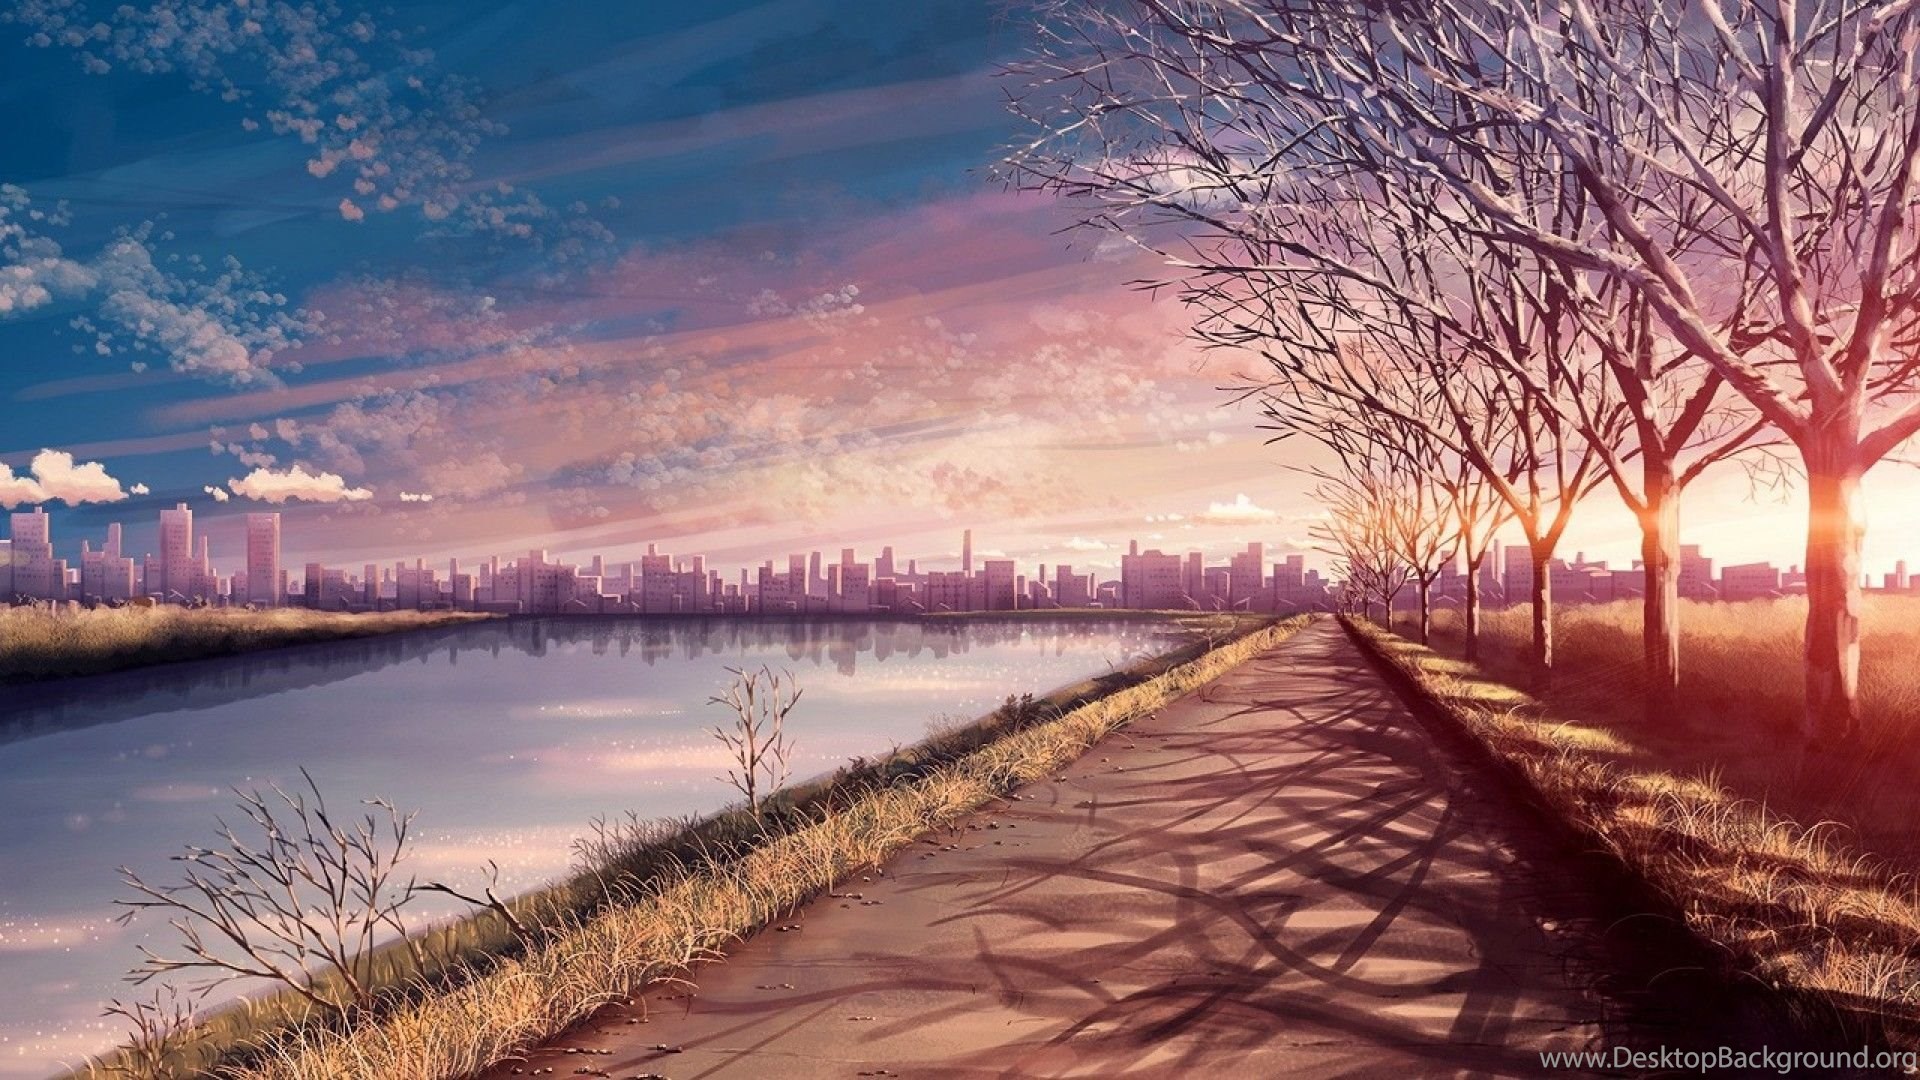 Scenery Anime Sunset Background - 1920x1080 Wallpaper ...